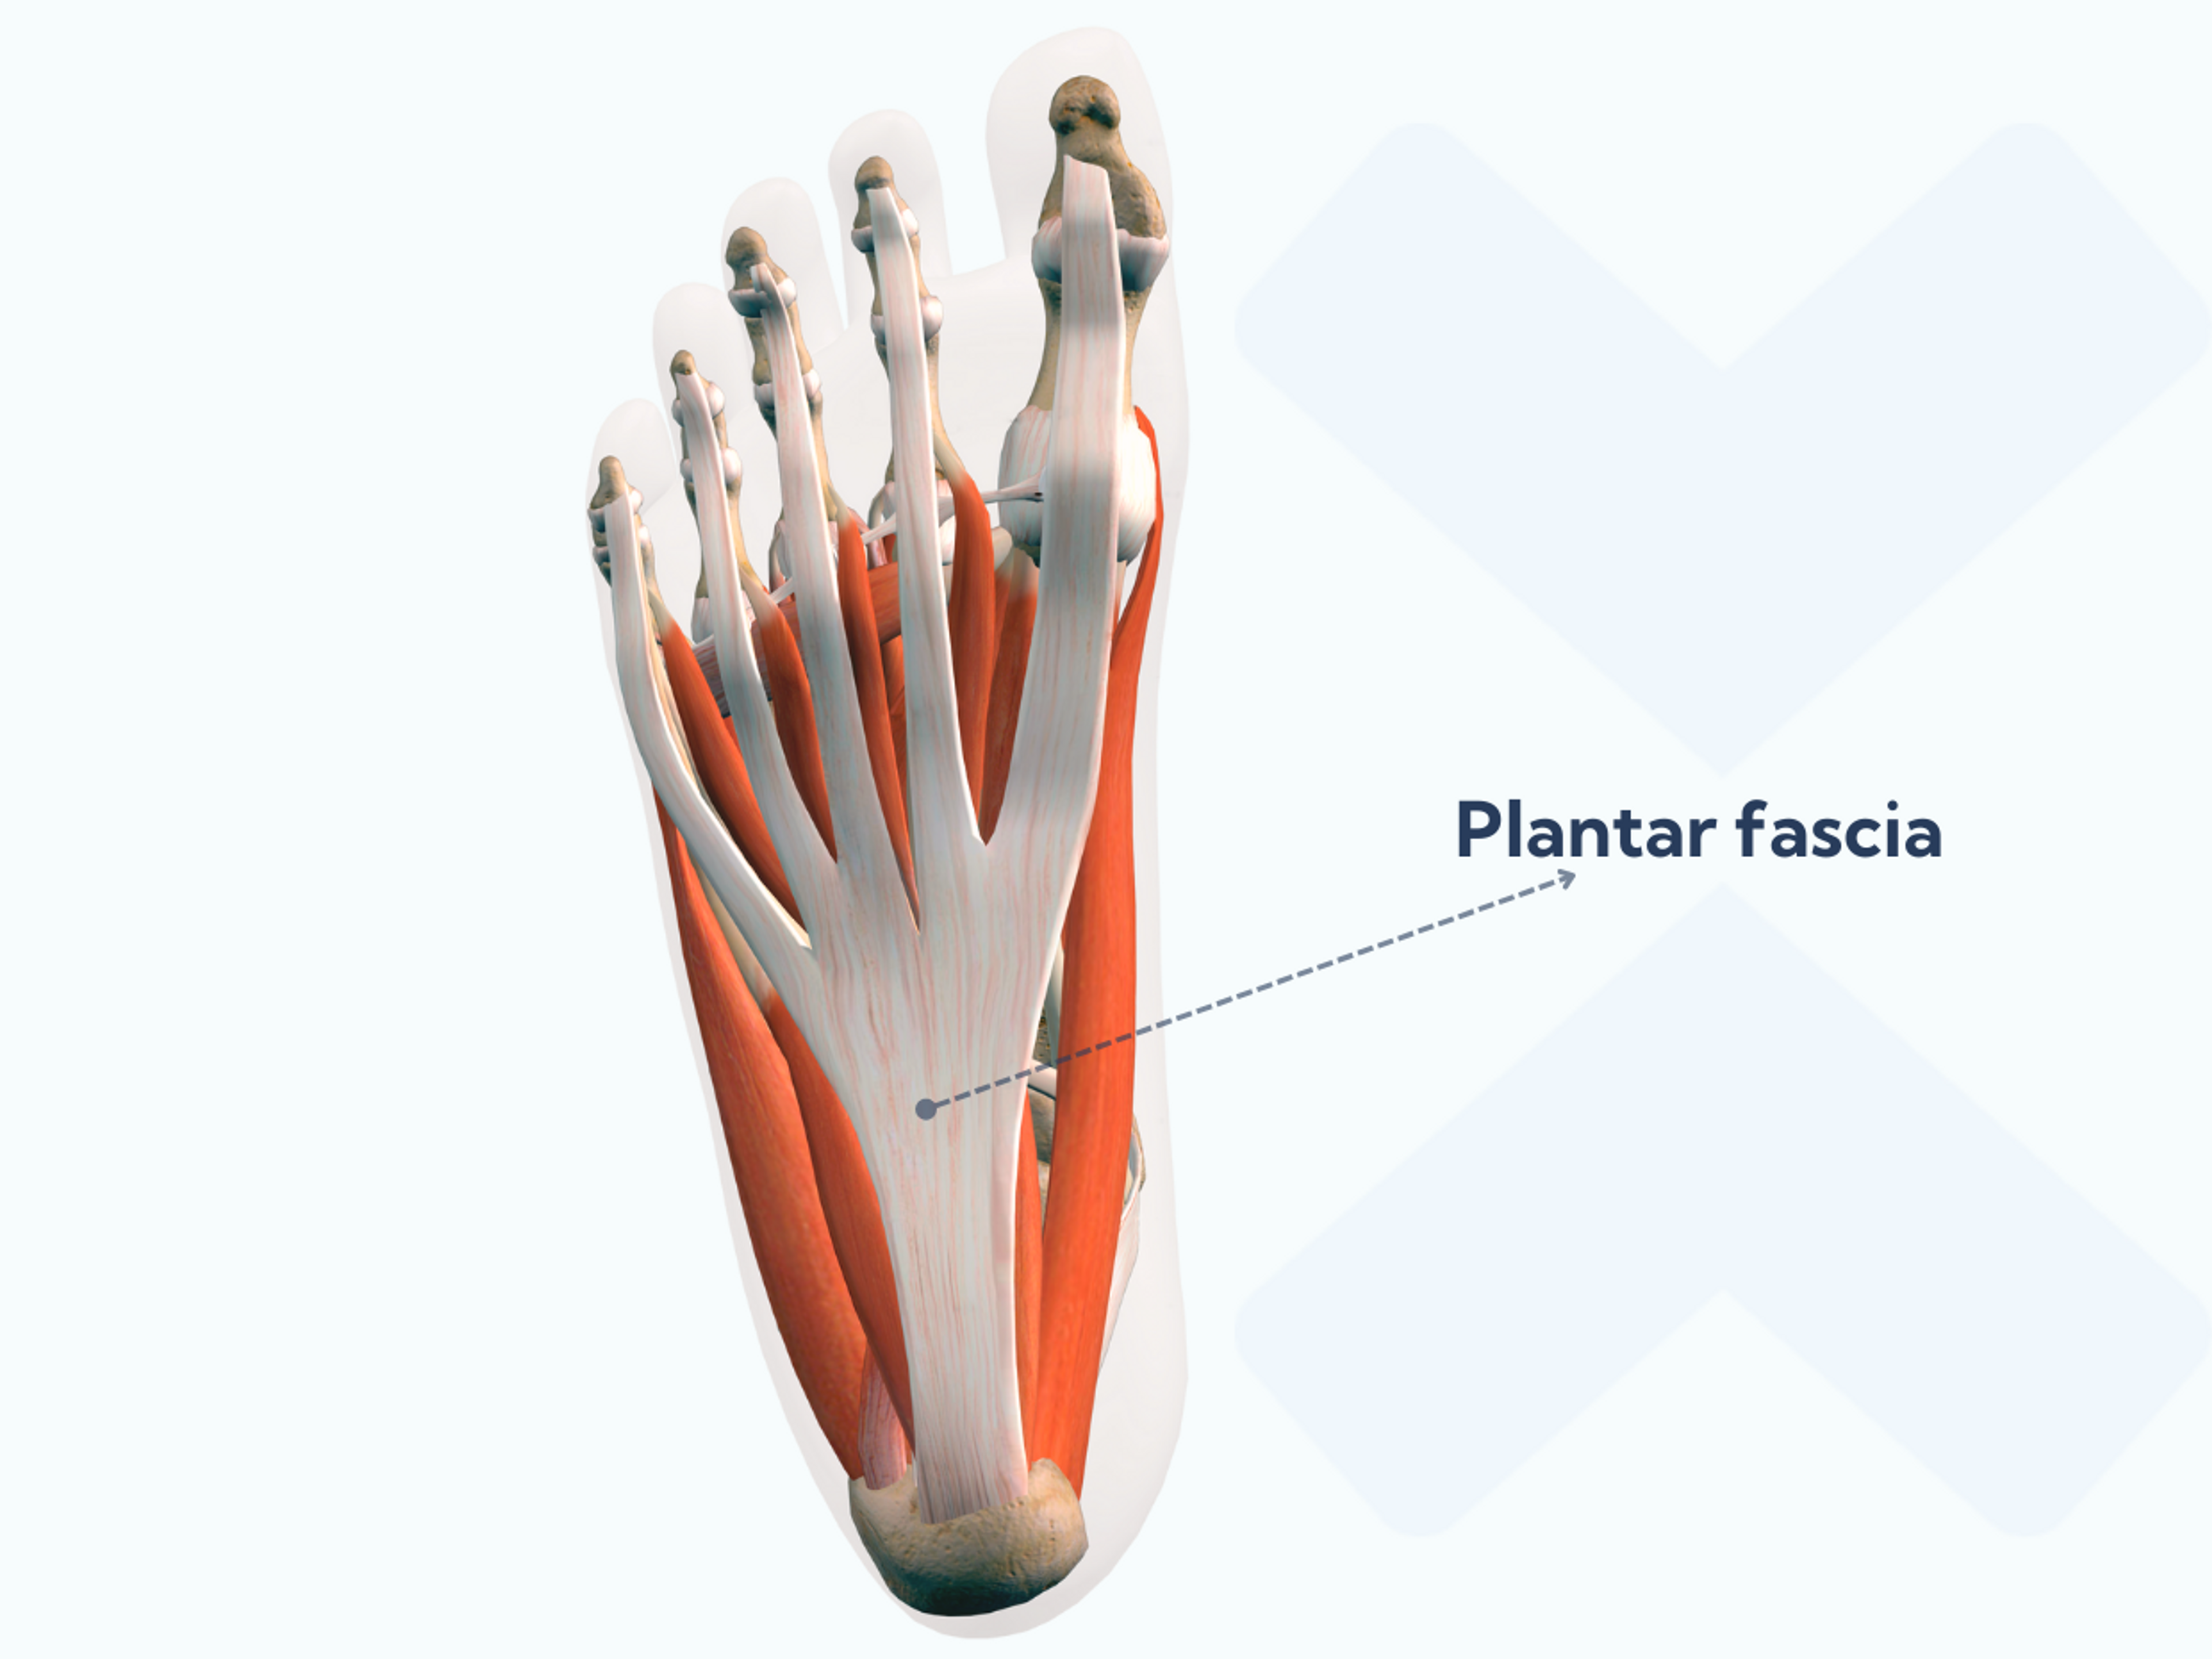 anatomy of the plantar fascia